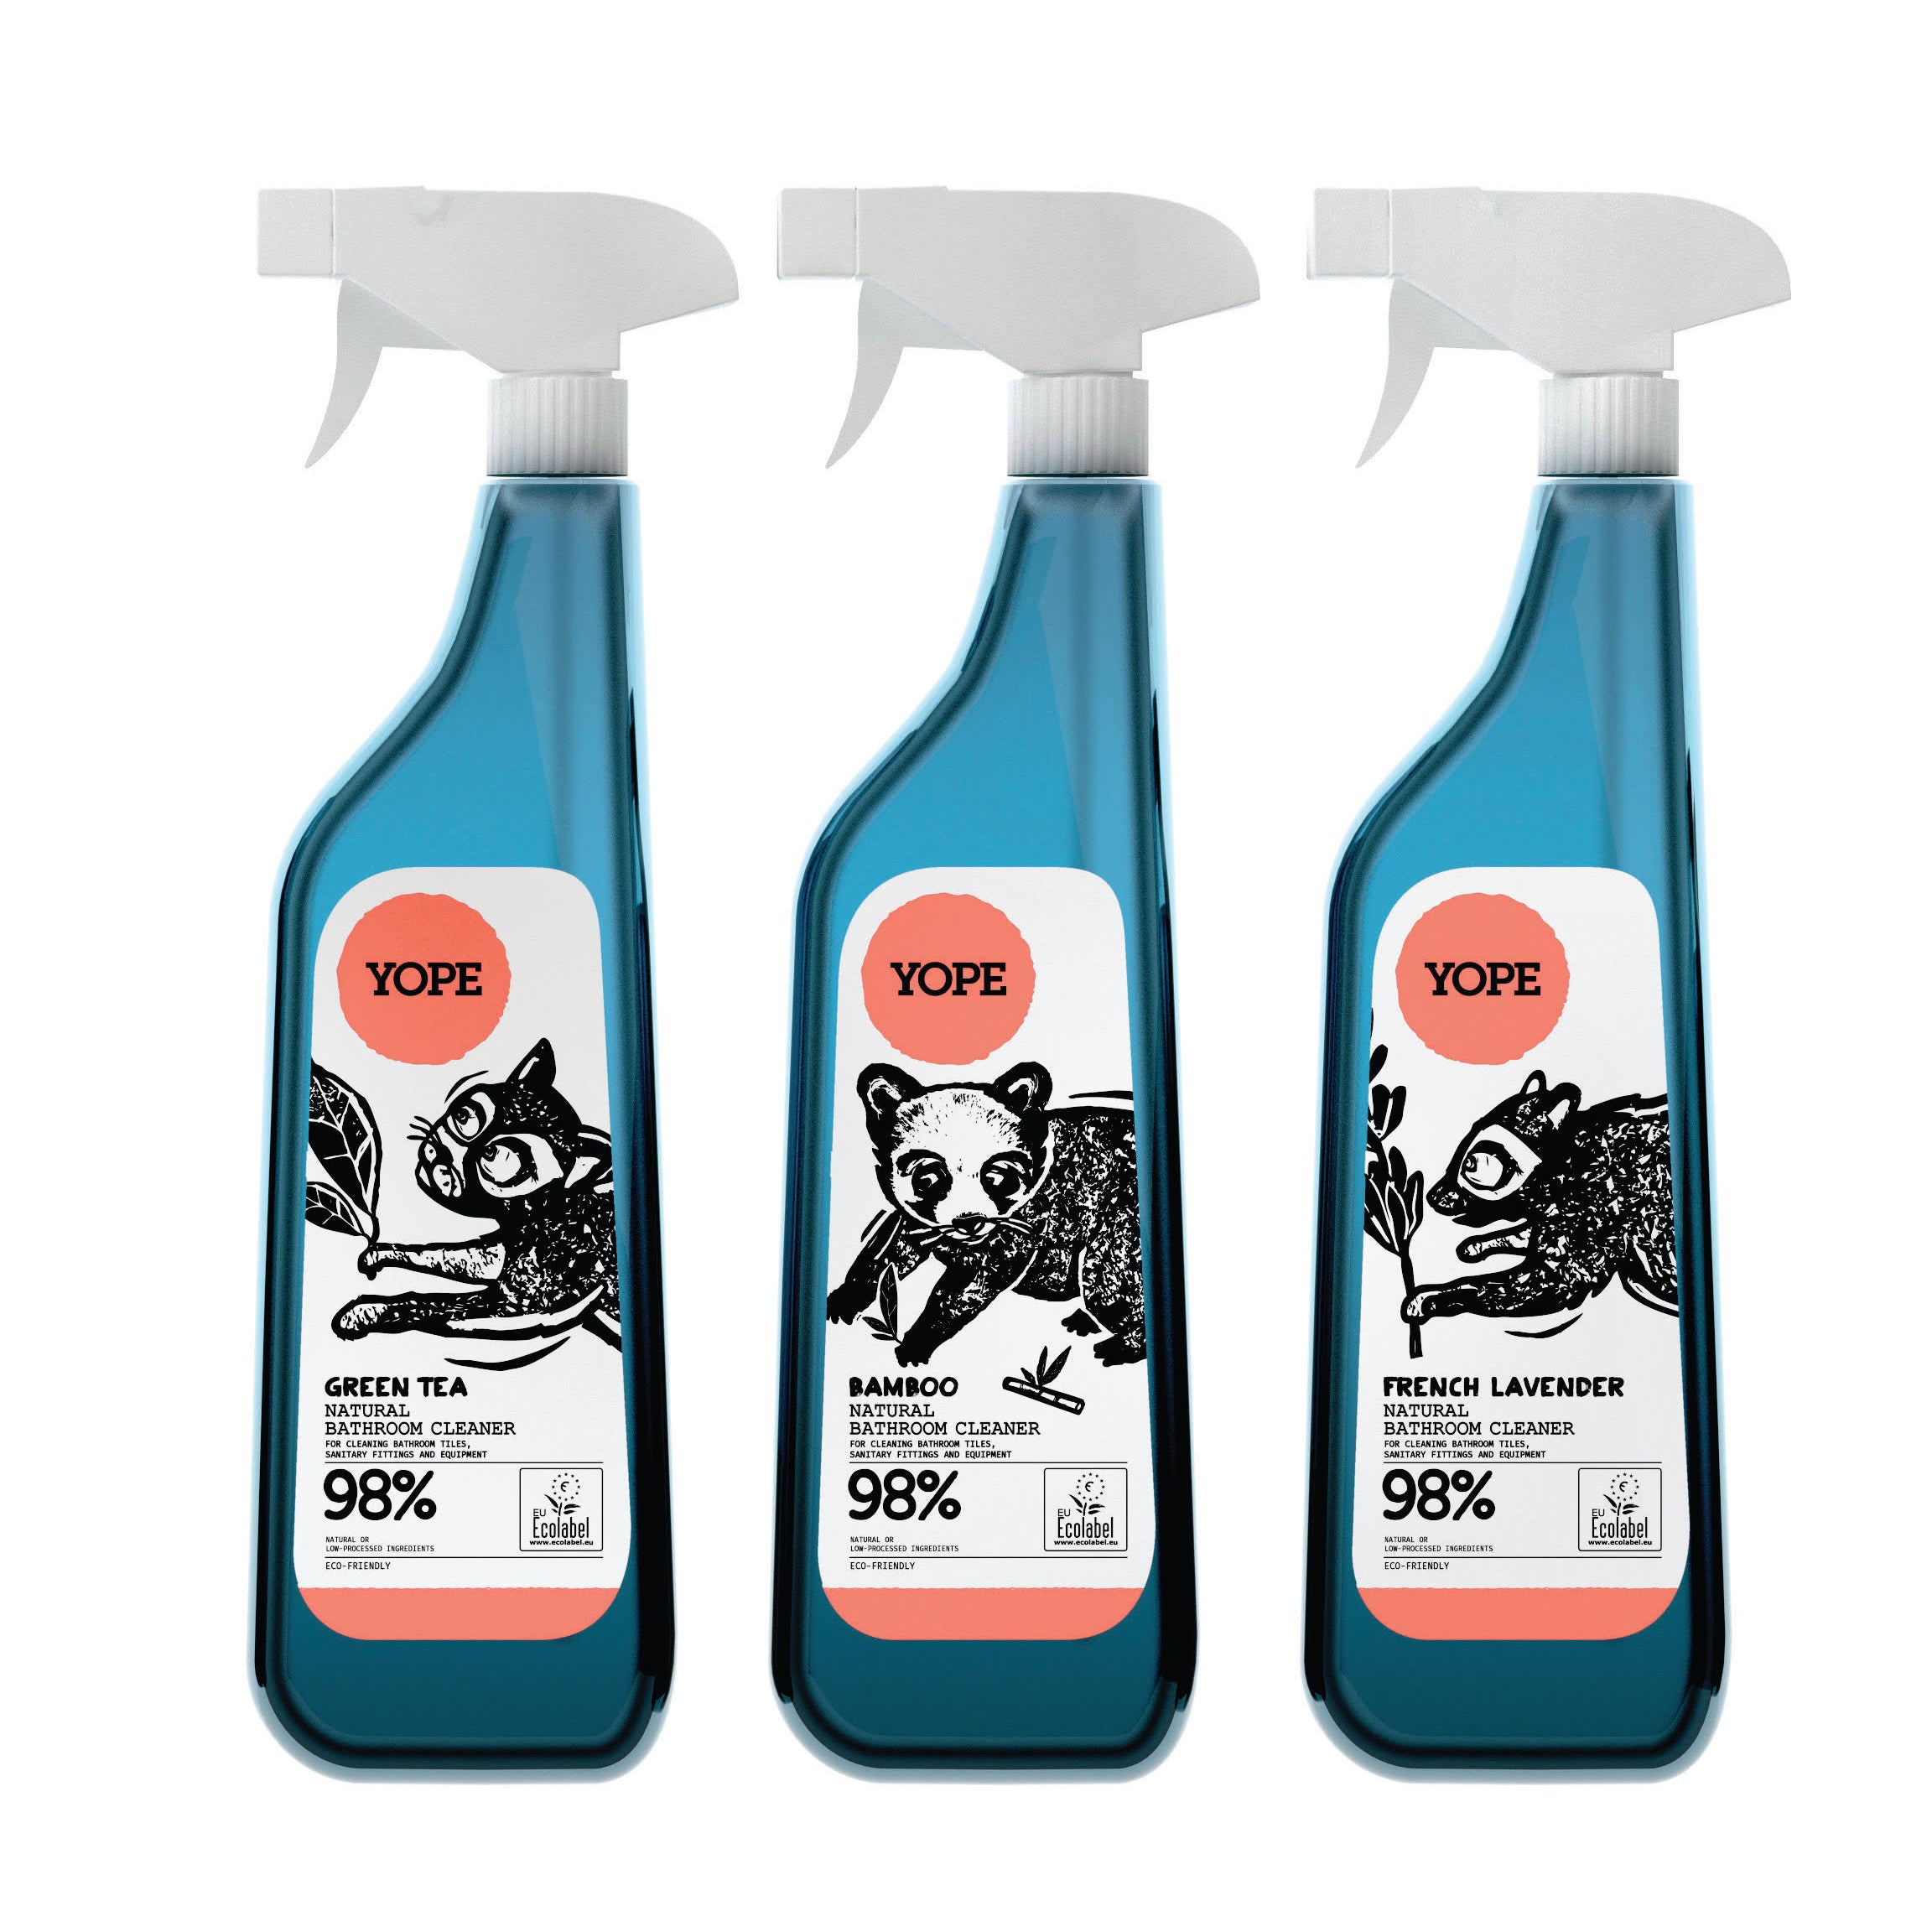 YOPE Bathroom Cleaner French Lavender / YOPE 法國薰衣草浴室清潔劑 - Xavi Soap